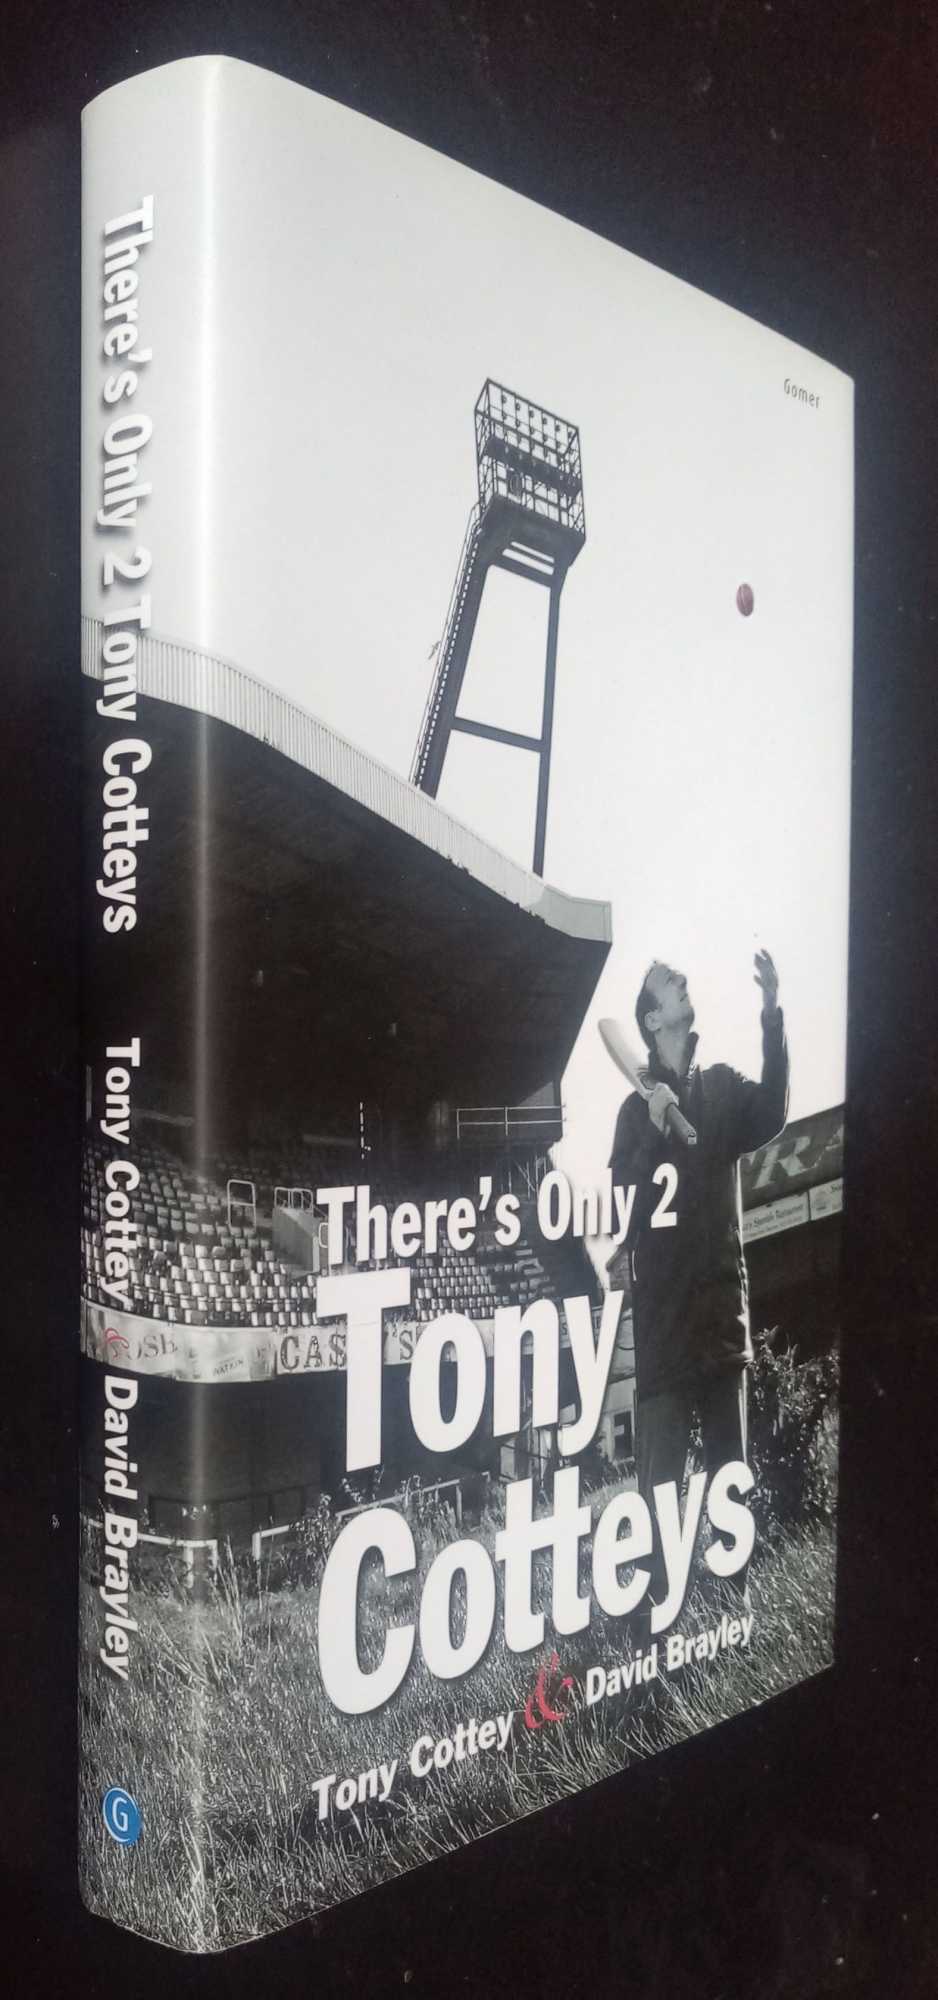 Tony Cottey & David Brayley - There's Only 2 Tony Cotteys  SIGNED